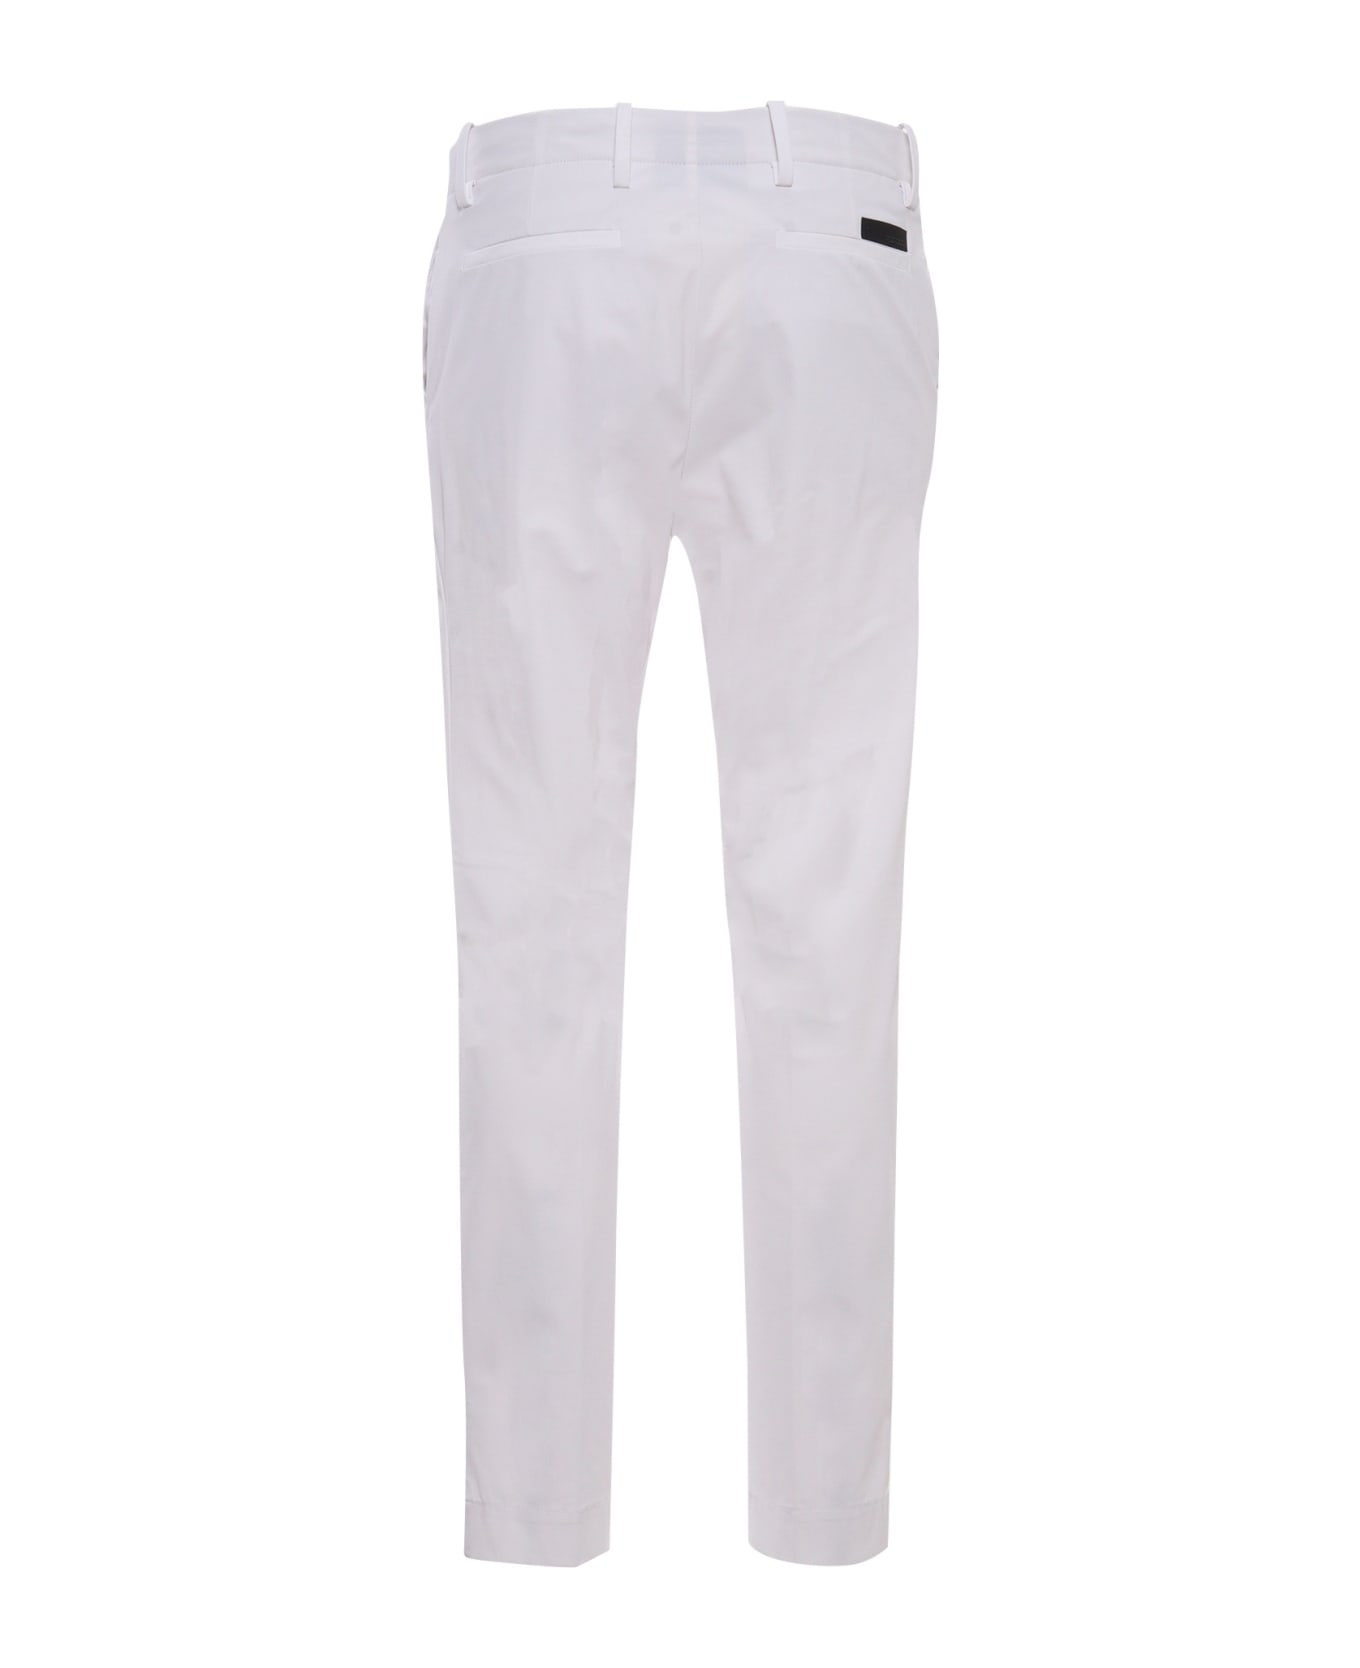 RRD - Roberto Ricci Design White Chino Trousers - WHITE